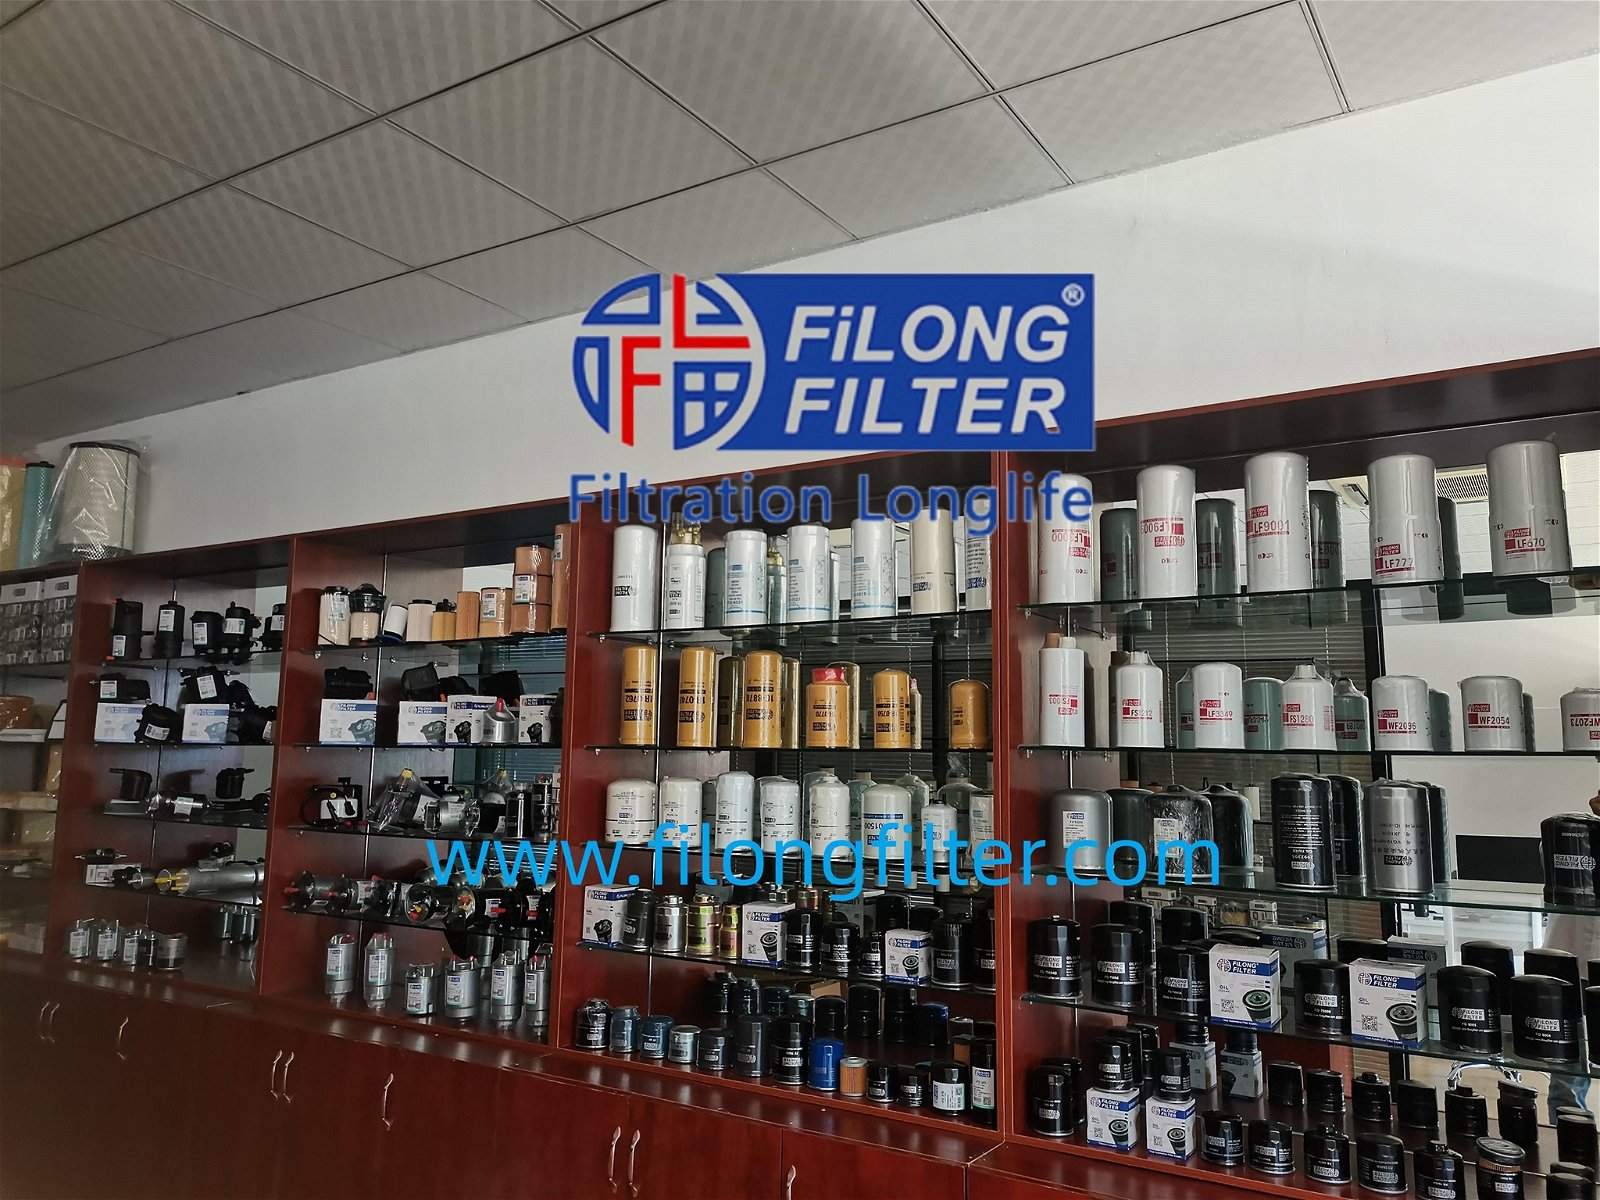 FILONG FILTER Manufacturer supply all kinds of replace filter for :AGCO FILTER，ATLAS COPCO FILTER，BALDWIN FILTER，BOMAG FILTER，CATERPILLAR FILTER，CNH FILTER，CASE IH FILTER，NEW HOLLAND FILTER，IVECO FILTER，CUMMINS-FLEETGUARD ，DAF FILTER，DEUTZ FILTER，DONALDSON FILTER，DONGFENG TRUCK FILTER， DOOSAN ，DAEWOO， FILTERFAW FILTER，FG WILSON FILTER，FORD FILTER，FOTON FILTER，HENGST FILTER，HINO FILTER，HITACHI FILTER，HYUNDAI FILTER，HYVA FILTER，ISUZU FILTER，IVECO FILTER，JCB FILTER，JOHN DEERE FILTER，KING LONG HIGER， KOBELCO FILTER，KOMATSU FILTER，KUBOTA FILTER，LIUGONG FILTER，LH LEEMIN HYDRAULIC， MAN FILTER，MANN FILTER， ，MERCEDES BENZ FILTER，MITSUBISHI FILTER，MTU FILTER，NELSON FILTER，PARKER RACOR FILTER，PERKINS FILTER，PEUGEOT FILTER，RENAULT FILTER，SANY FILTER，TATA & Leyparts FILTER,SDEC/SHANGCHAI FILTER，SCANIA FILTER，SHACMAN/SHAANXI FILTER，SHANTUI FILTER，SINOTRUK HOWO FILTER，THERMO KING FILTER，TOYOTA FILTER，VOLVO FILTER，WEICHAI FILTER，XCMG FILTER，YANMAR FILTER，YUCHAI FILTER，KAESER FILTER，LIEBHERR FILTER，MP Filtri，SAIC-IVECO HONGYAN，SEPAR FILTER，ZF FILTER......